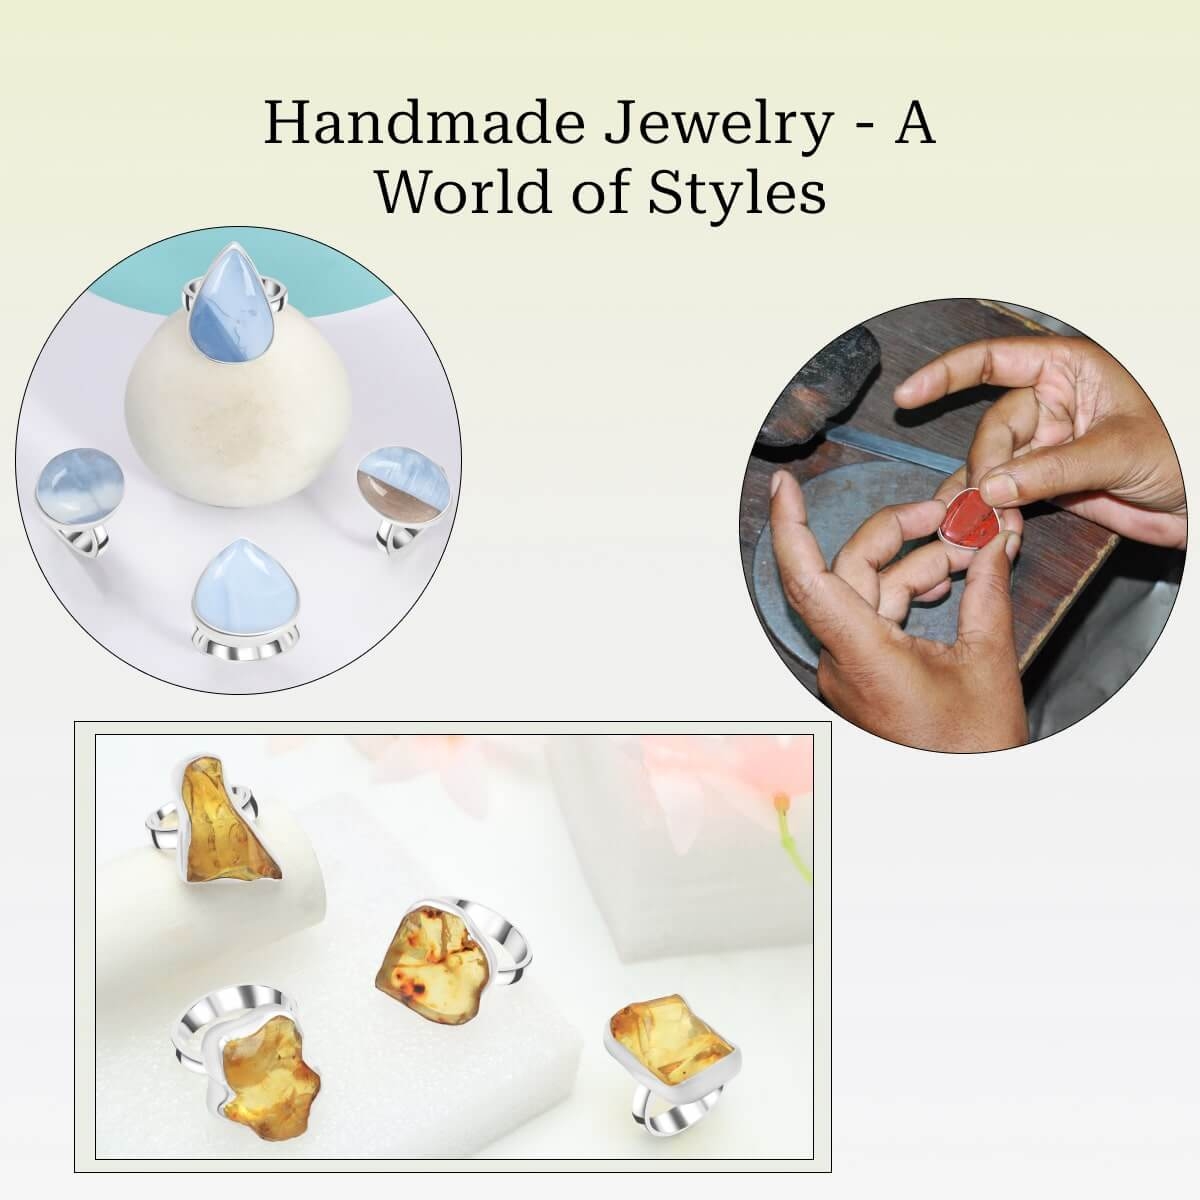 Types of Handmade Jewelry